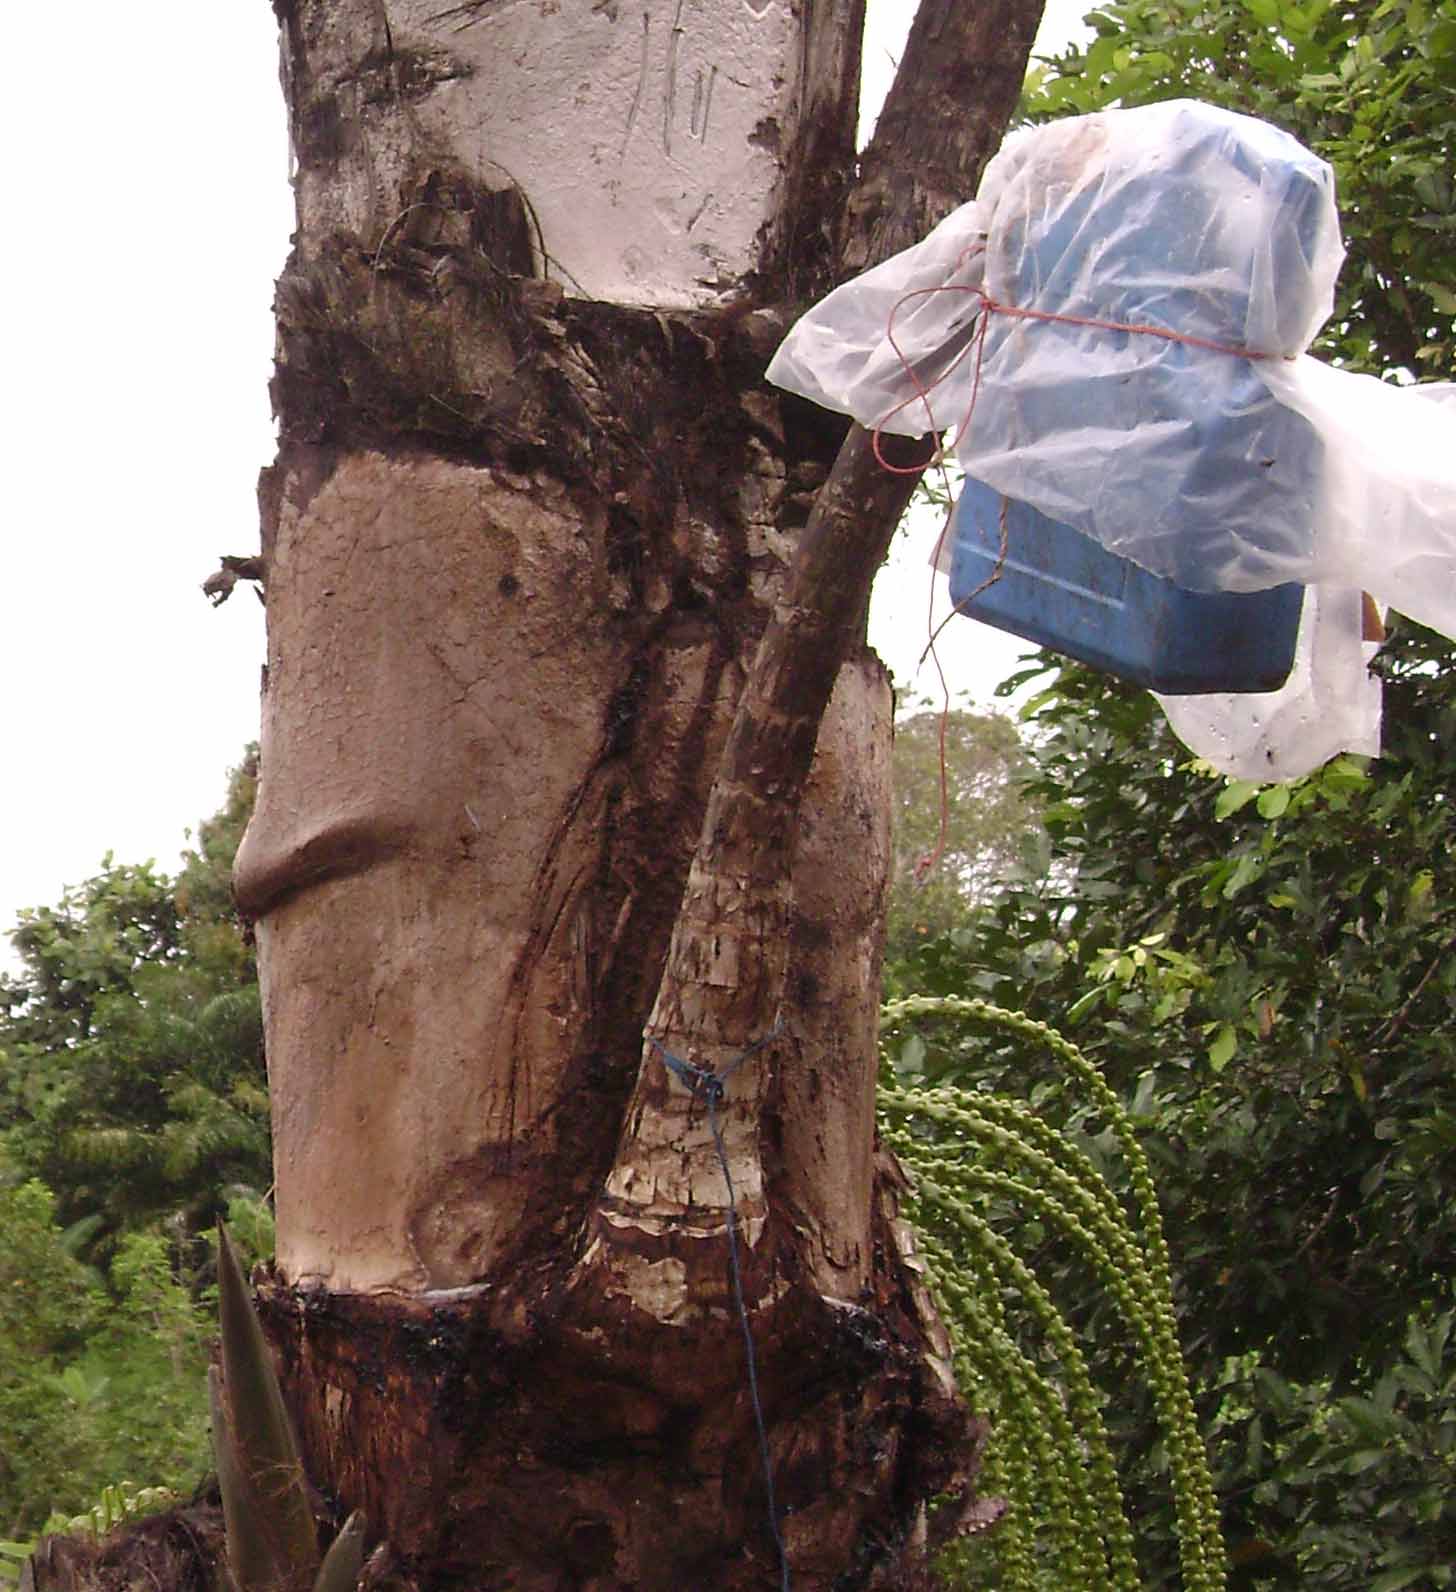 Jerigen plastik untuk menampung nira dari pohon Aren